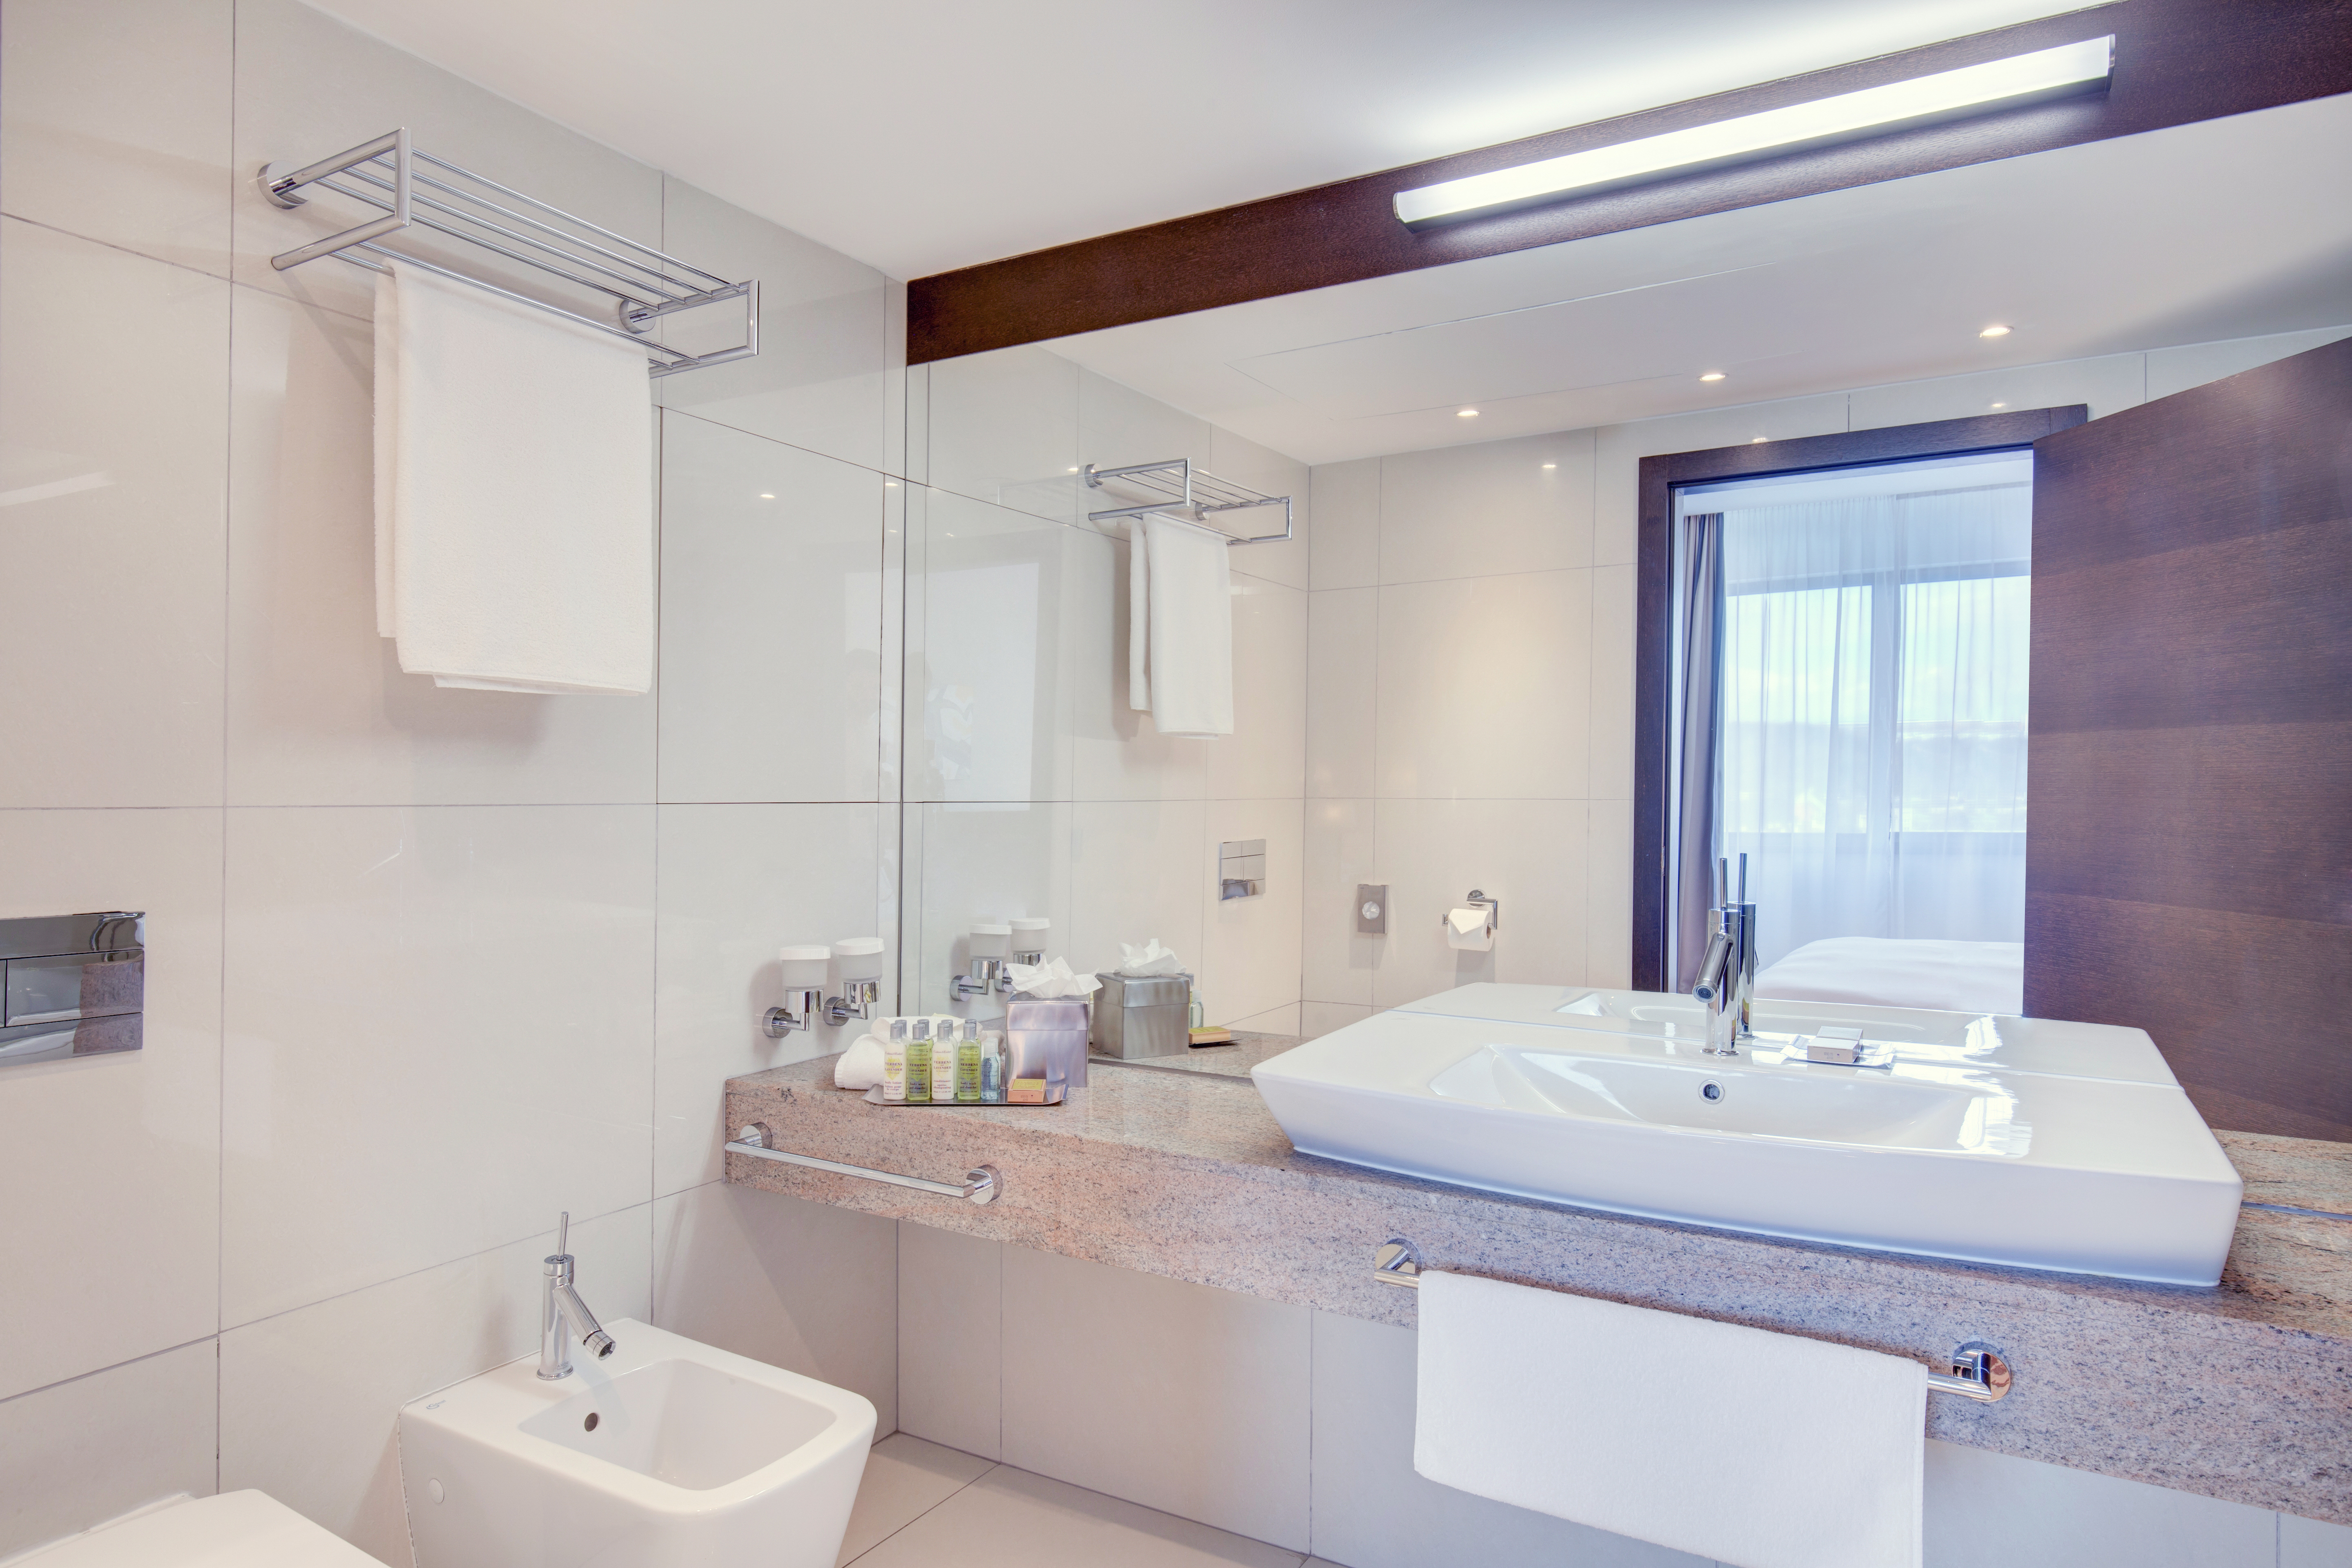 Bathroom Vanity Area with larg Mirror in Suite